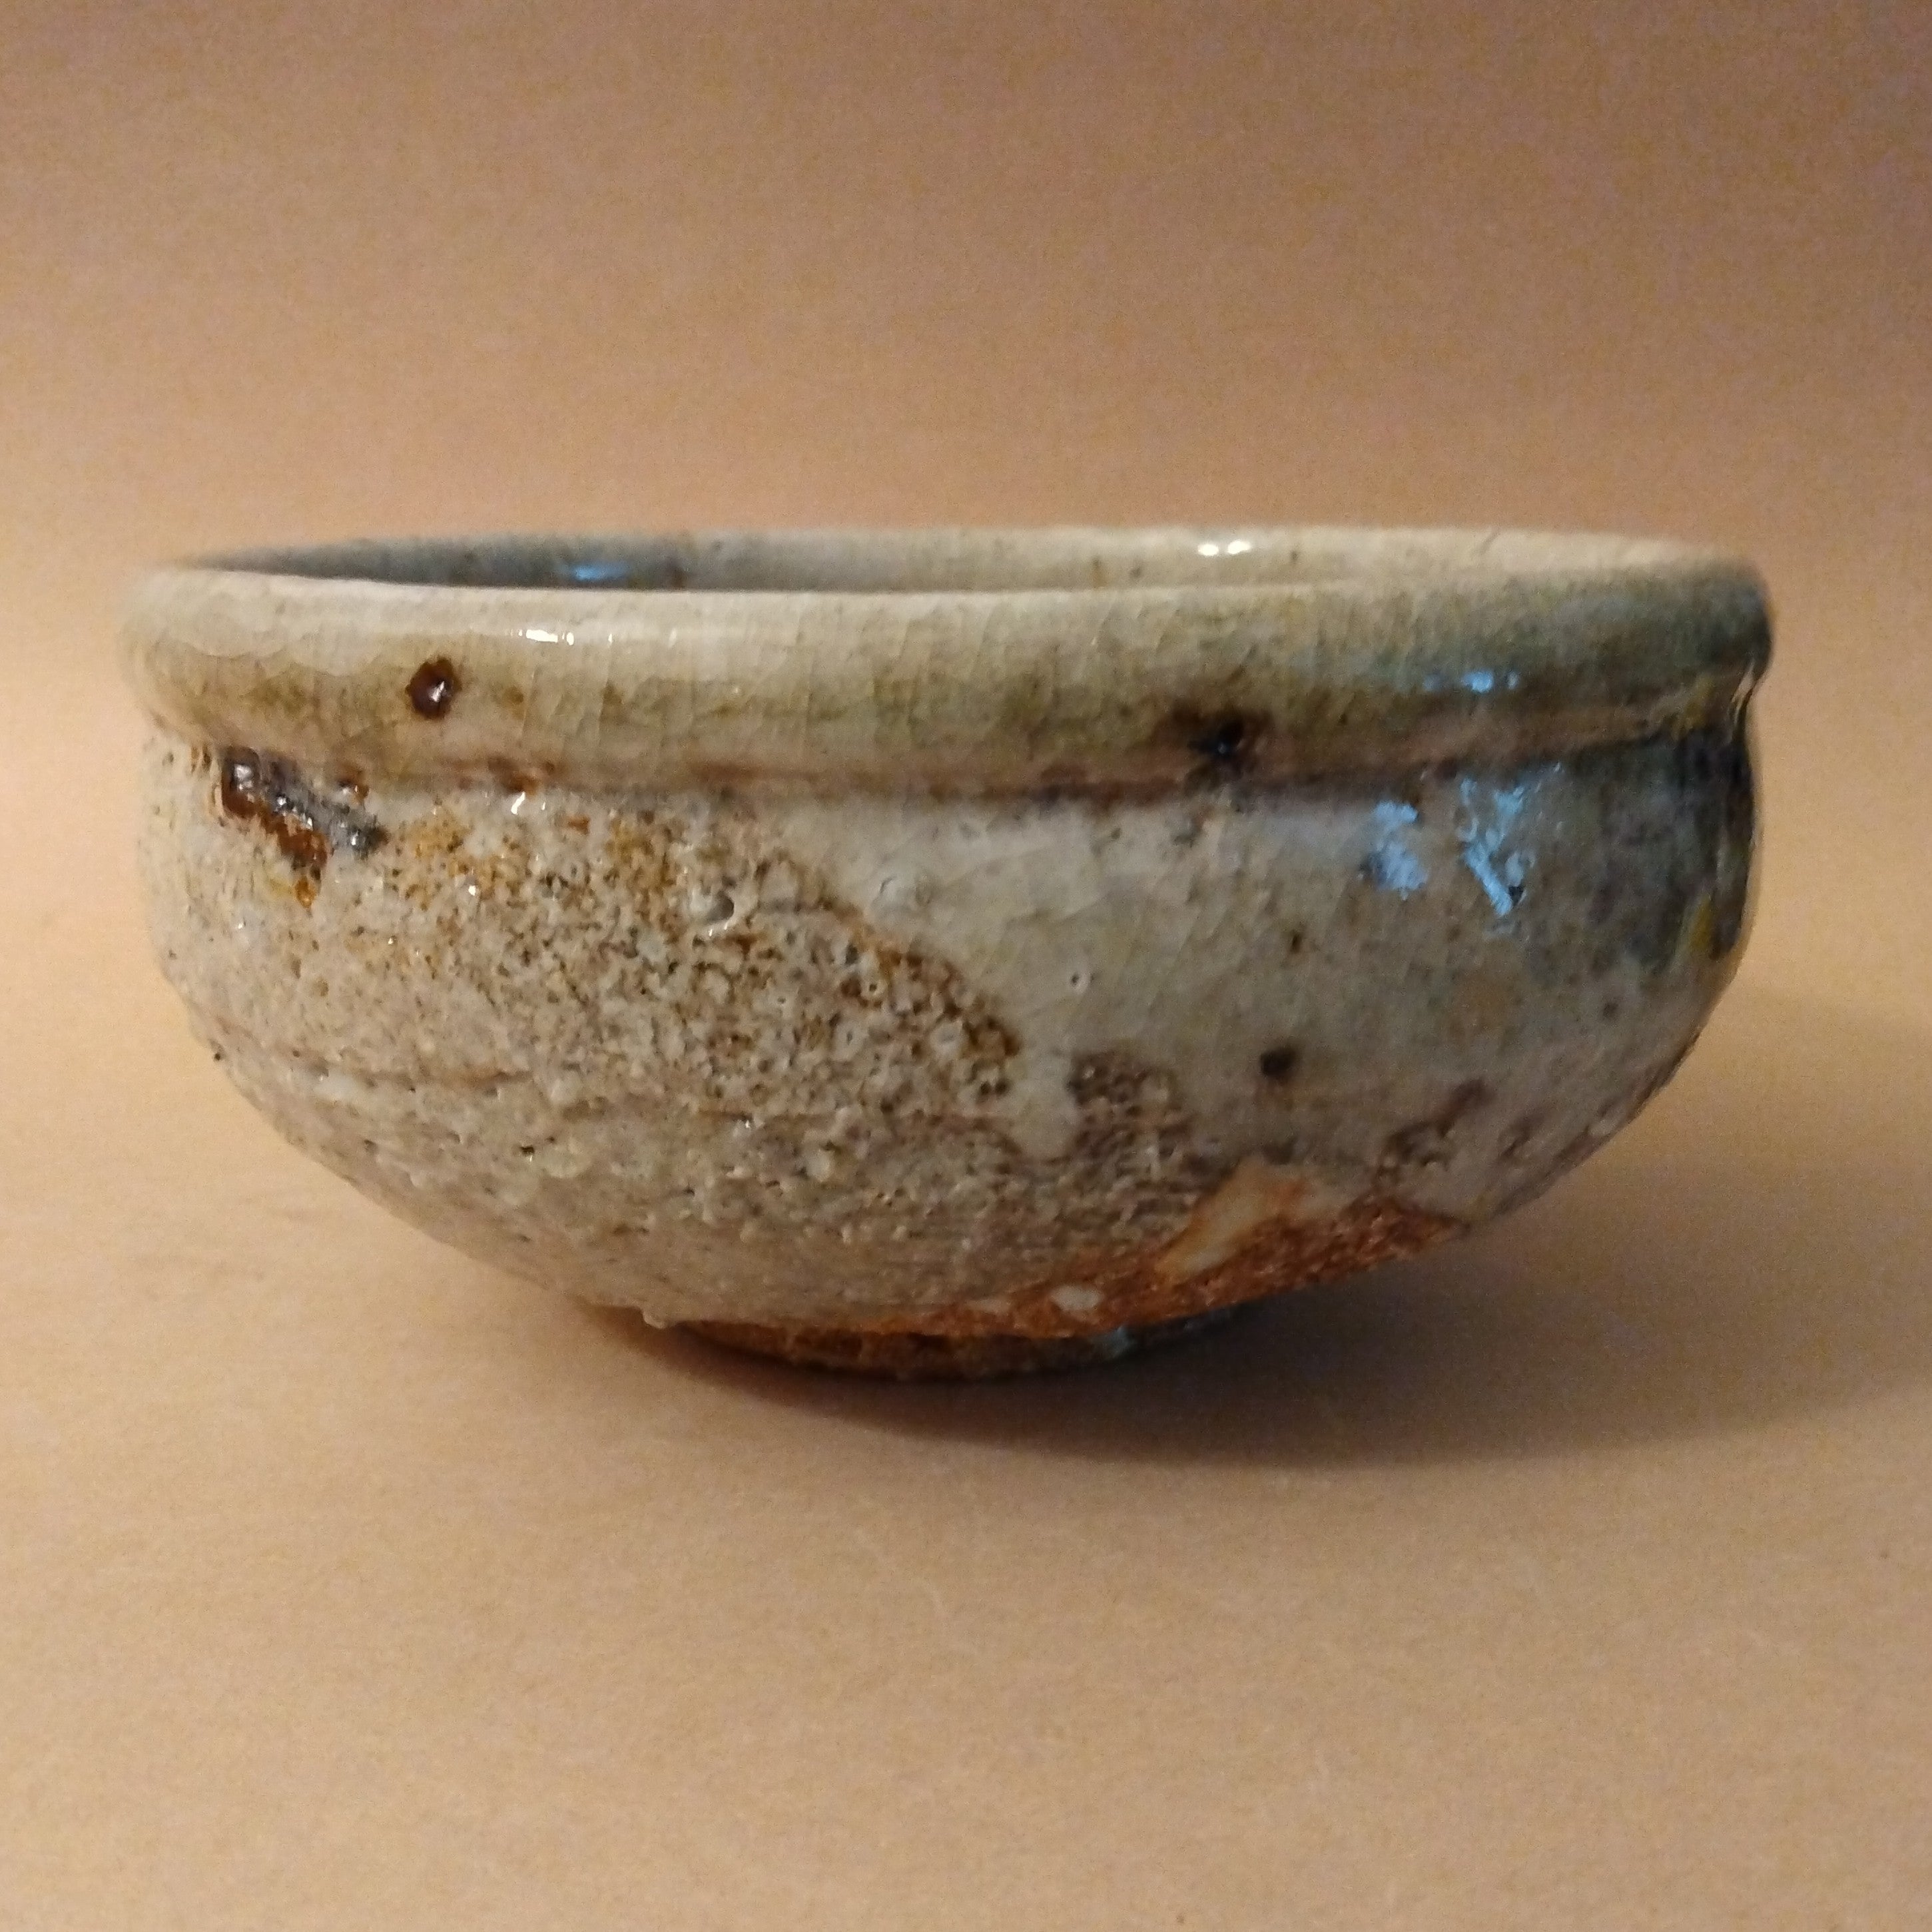 Wood-fired Shino Glaze Bowl with Feldspar loaded Clay, by George Gledhill